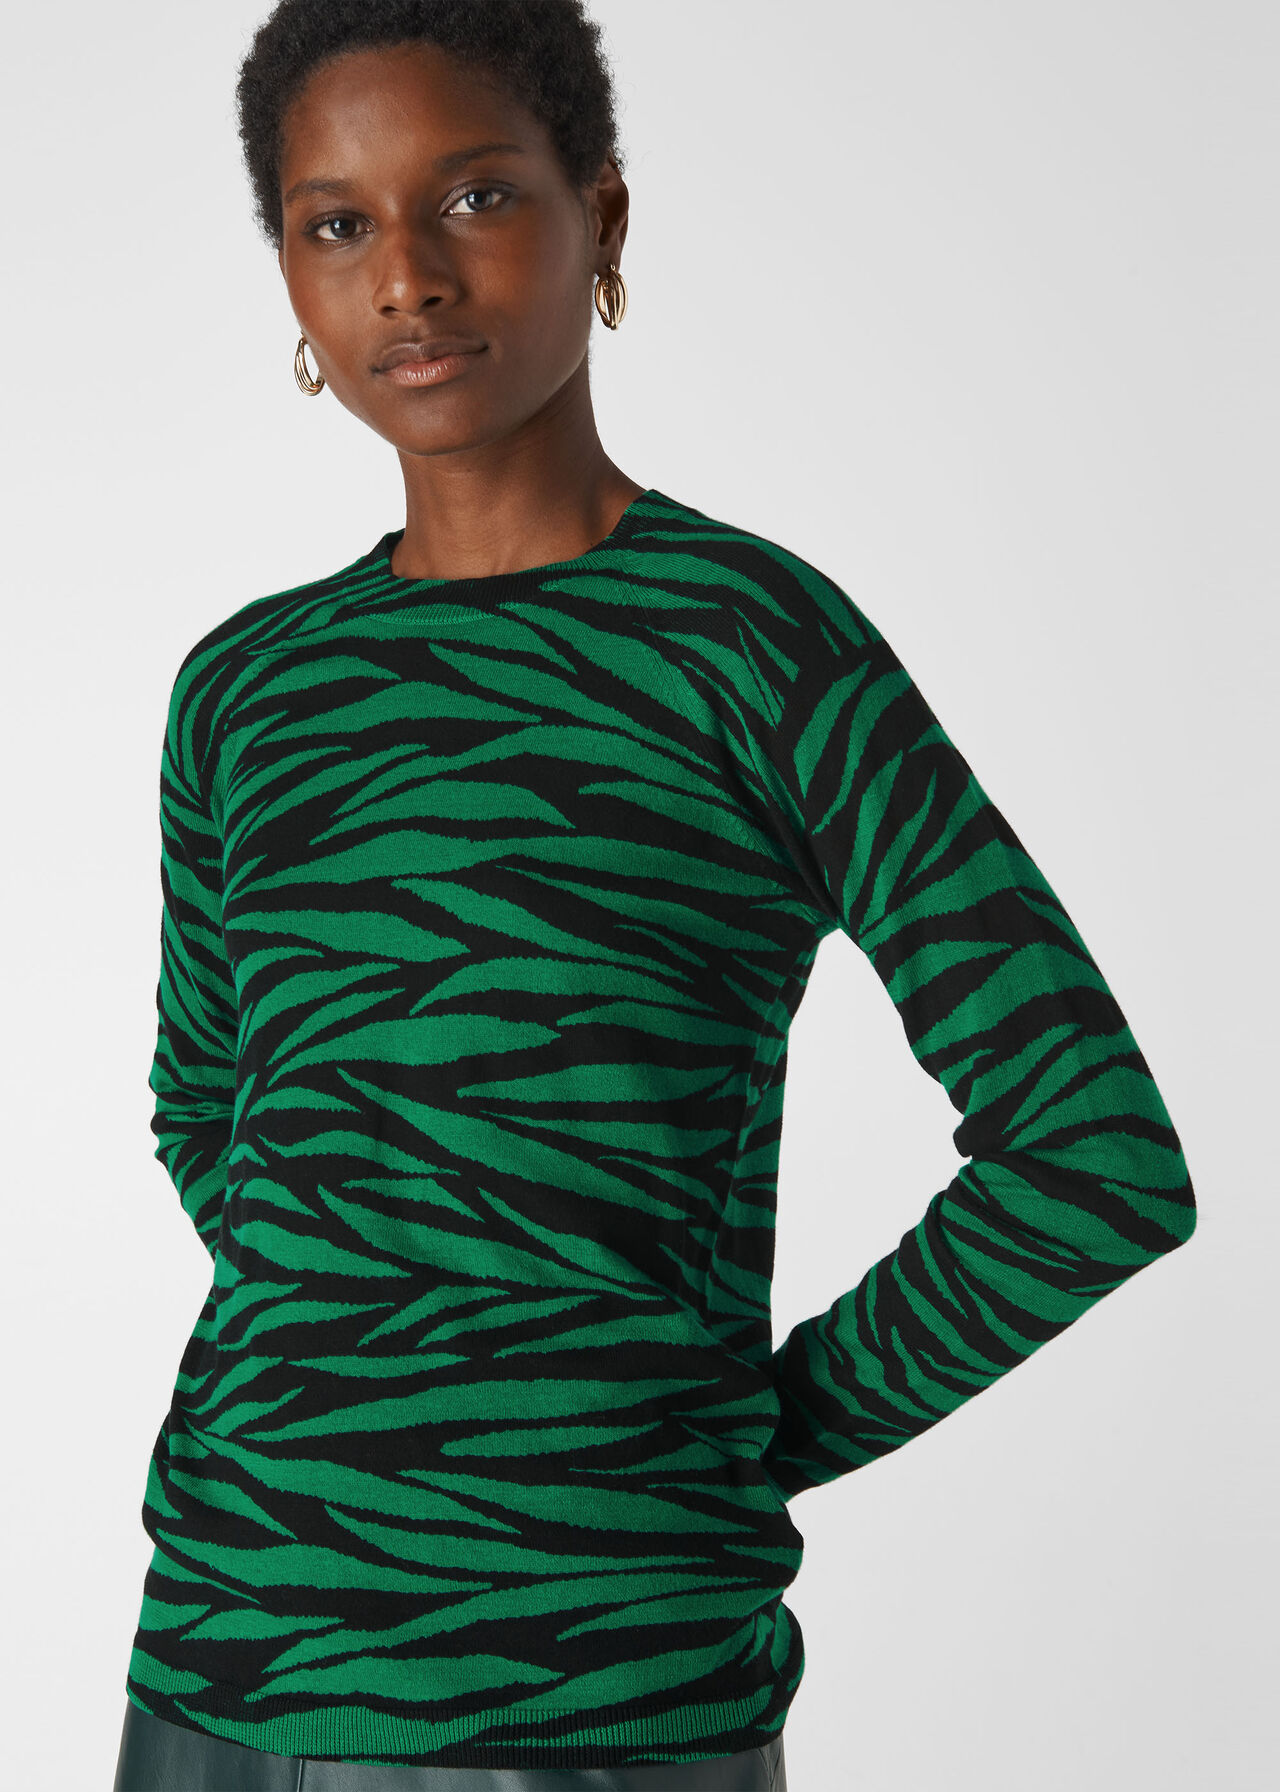 Tiger Stripe Crew Neck Knit Green/Multi